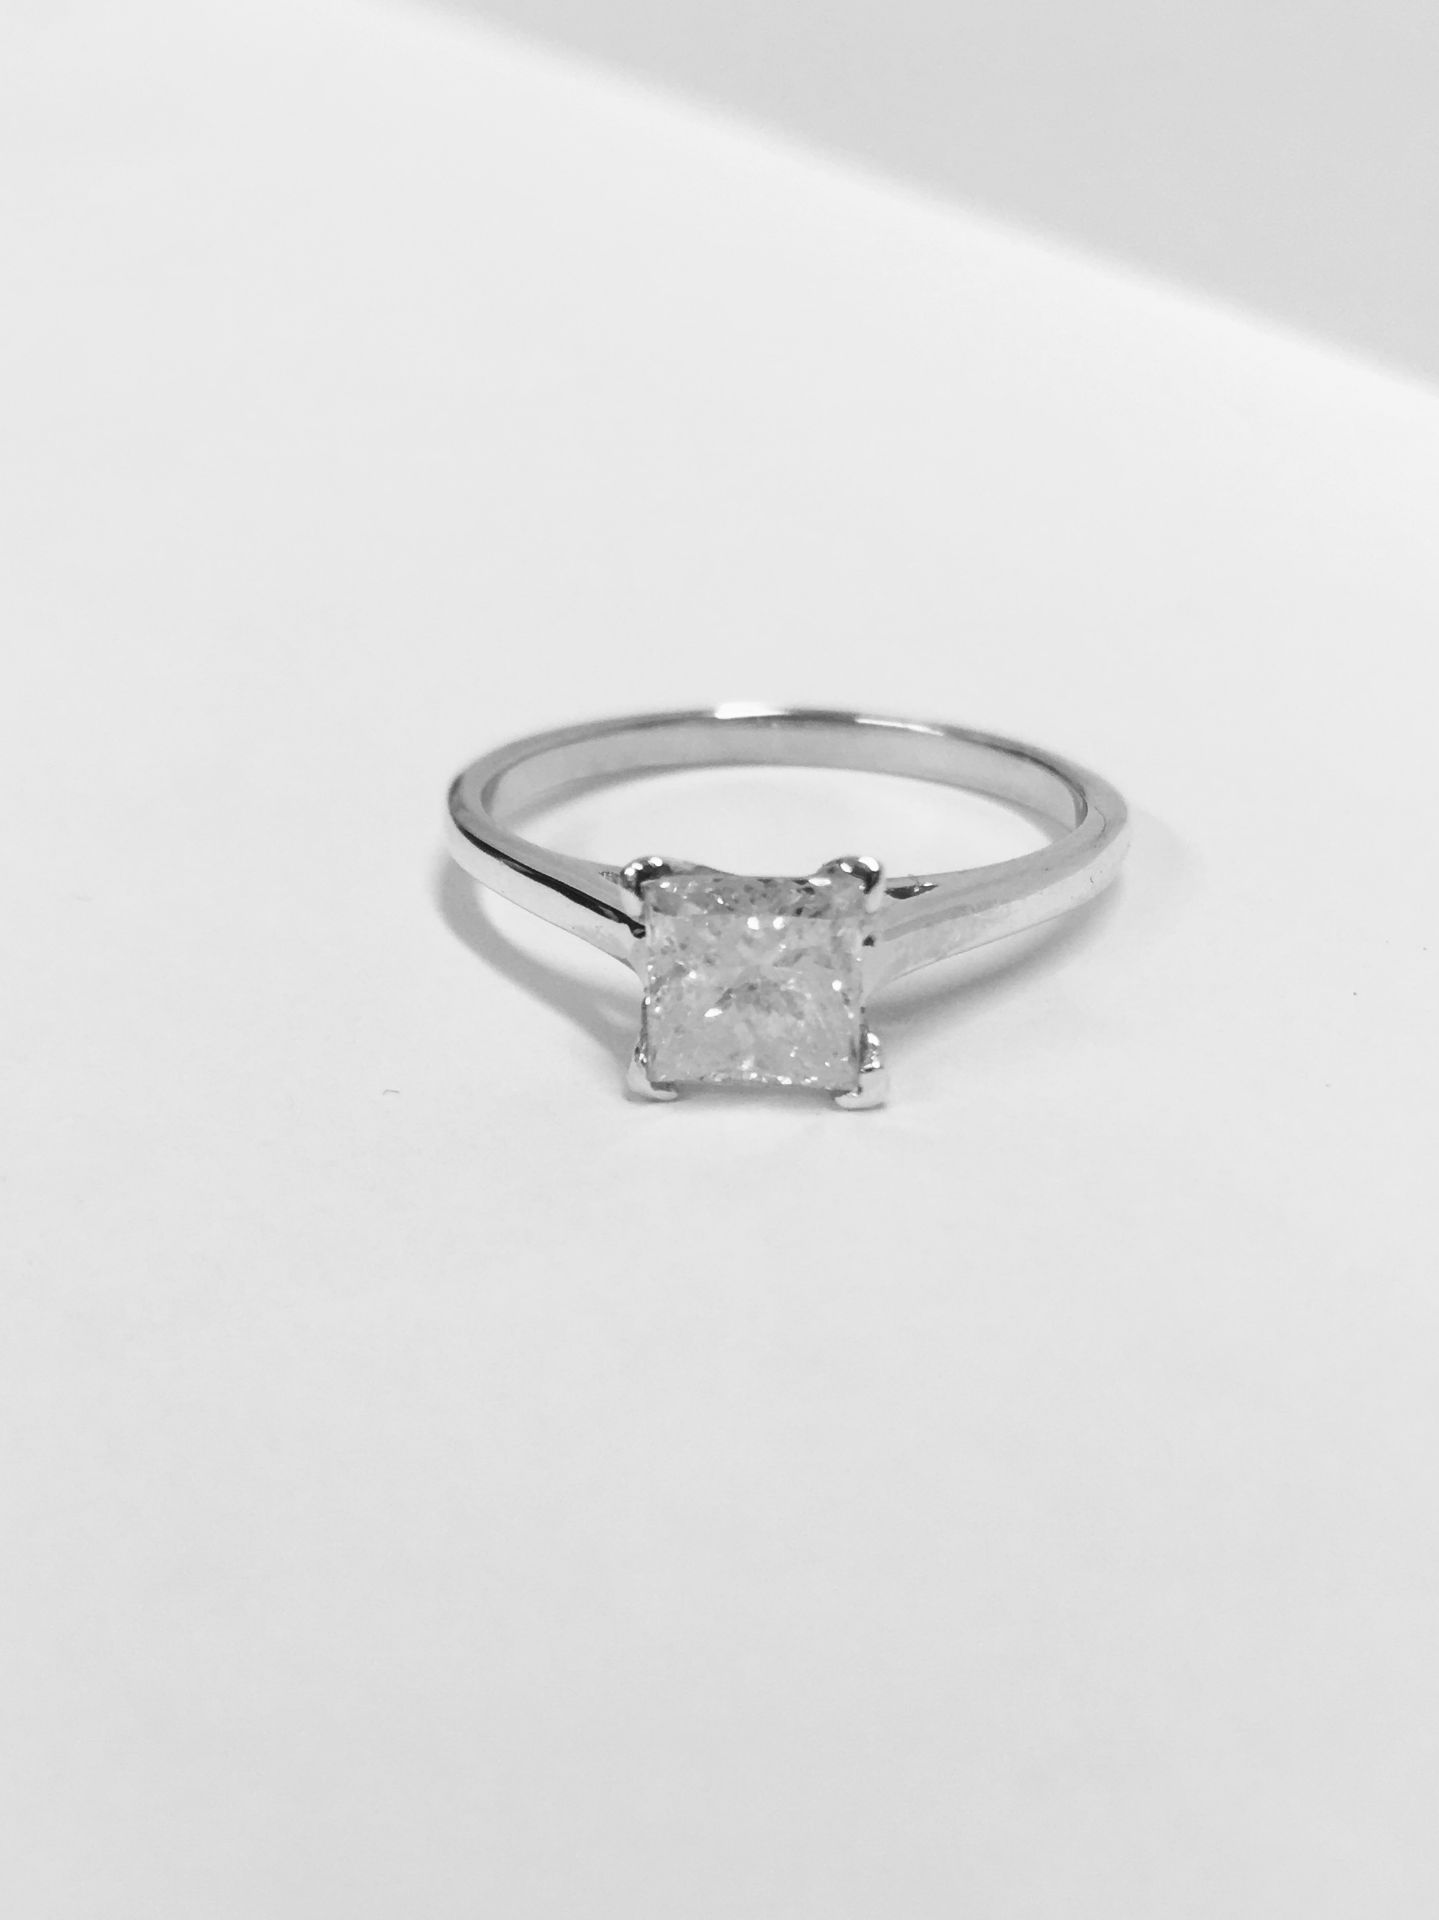 1ct Princess cut diamond solitaire ring,1ct princess cut h colour i2 clarity (enhanced),2.9gms